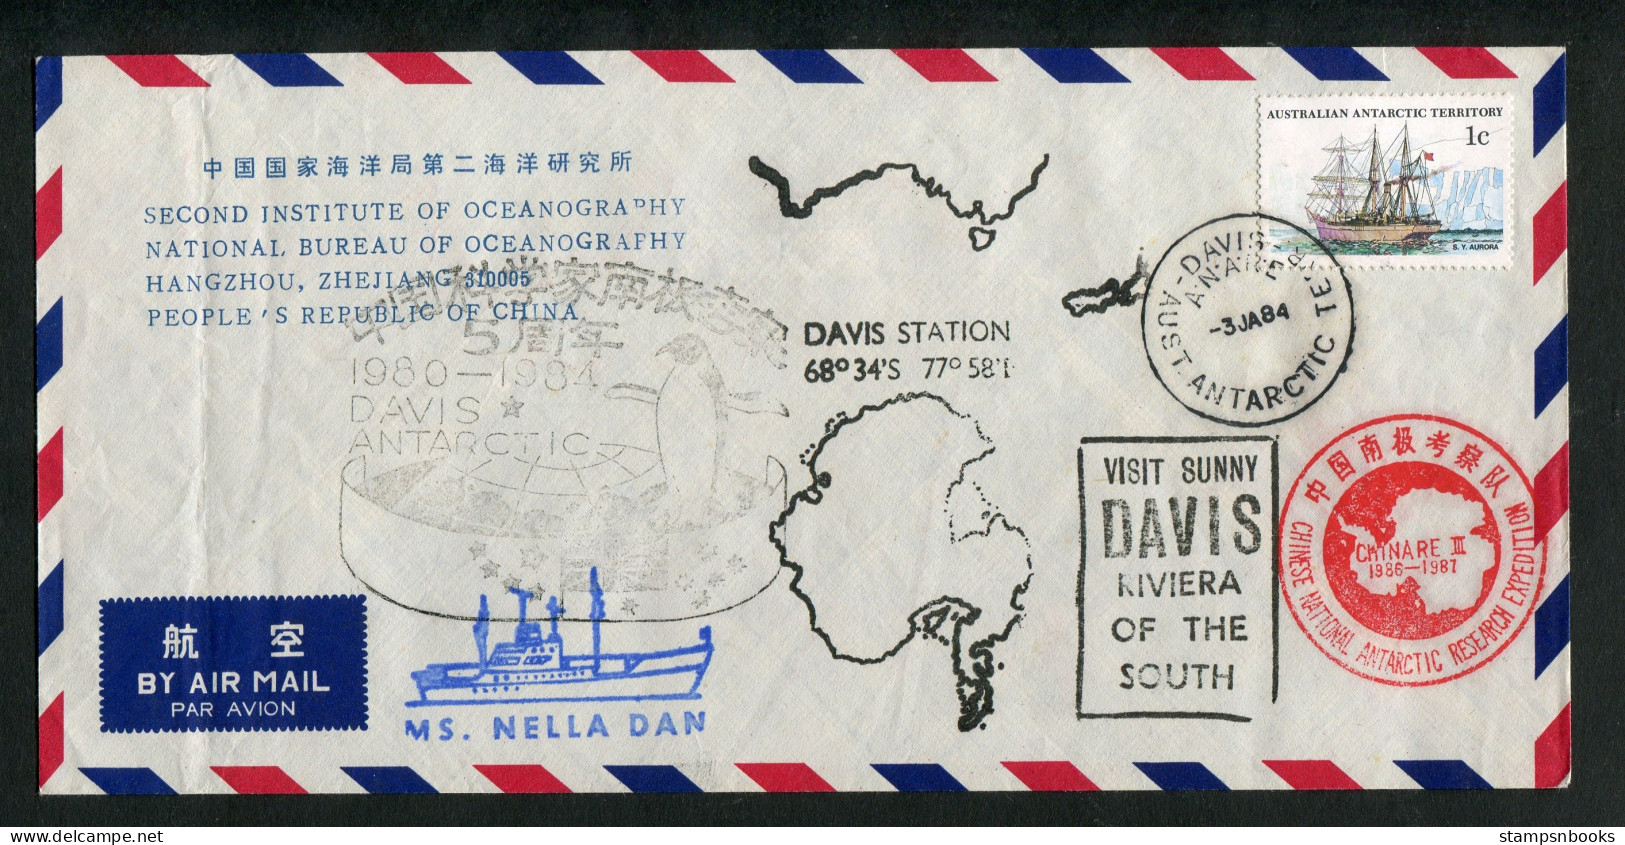 1984 A.A.T. China M.S. NELLA DAN Ship DAVIS Antarctica CHINARE Expedition Penguin Cover - Covers & Documents